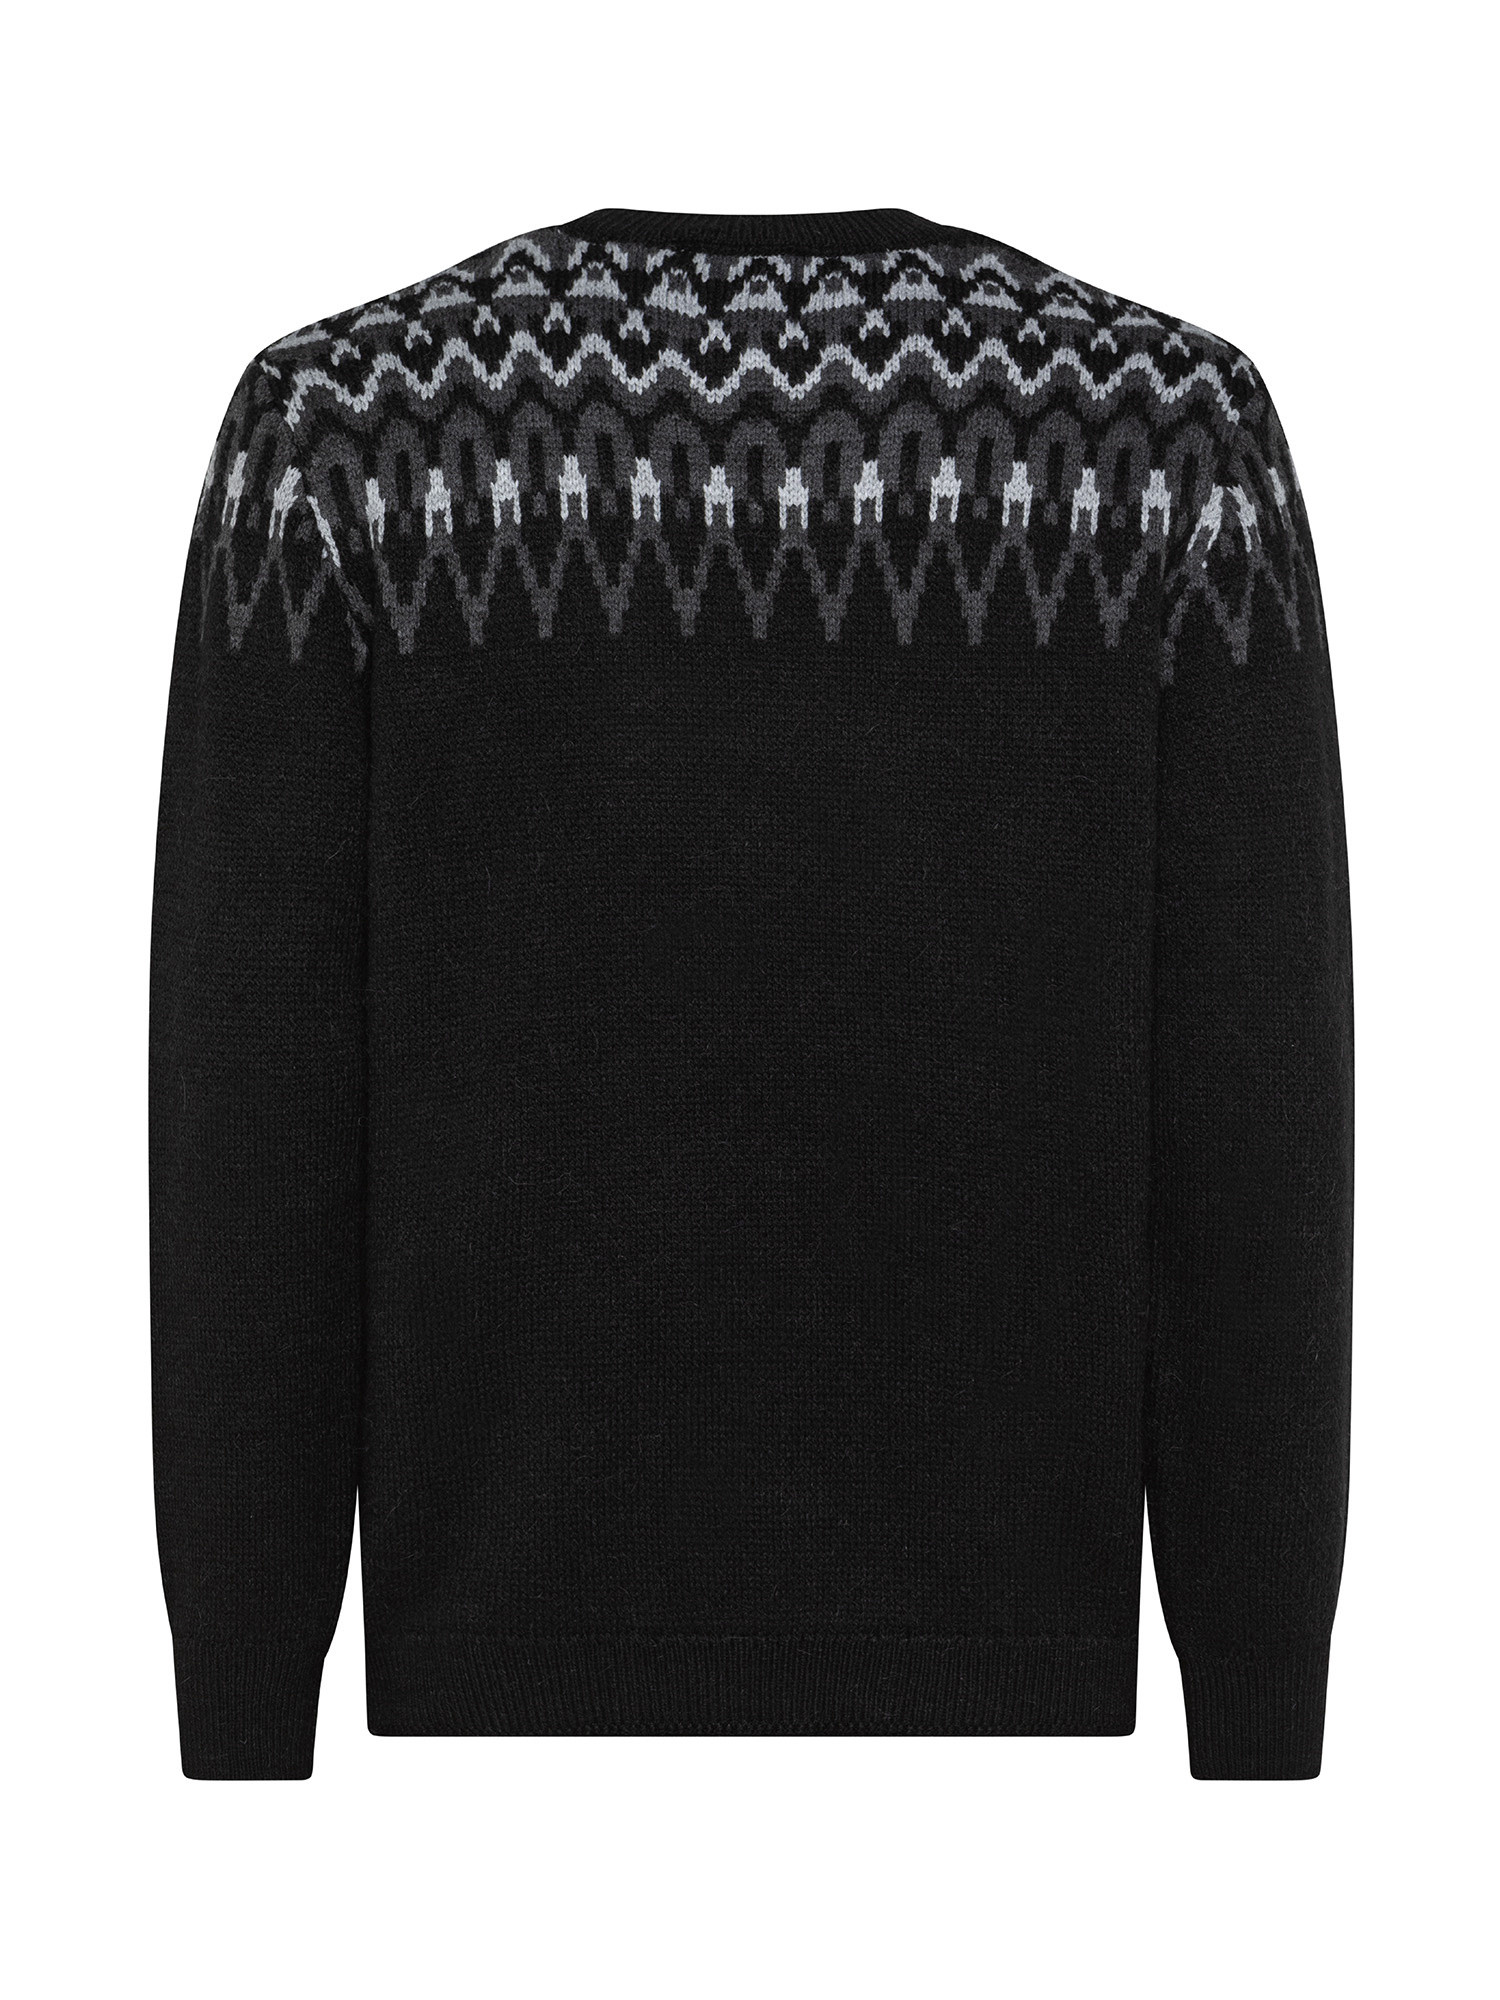 Superdry - Fair Isle crewneck sweater, Black, large image number 1